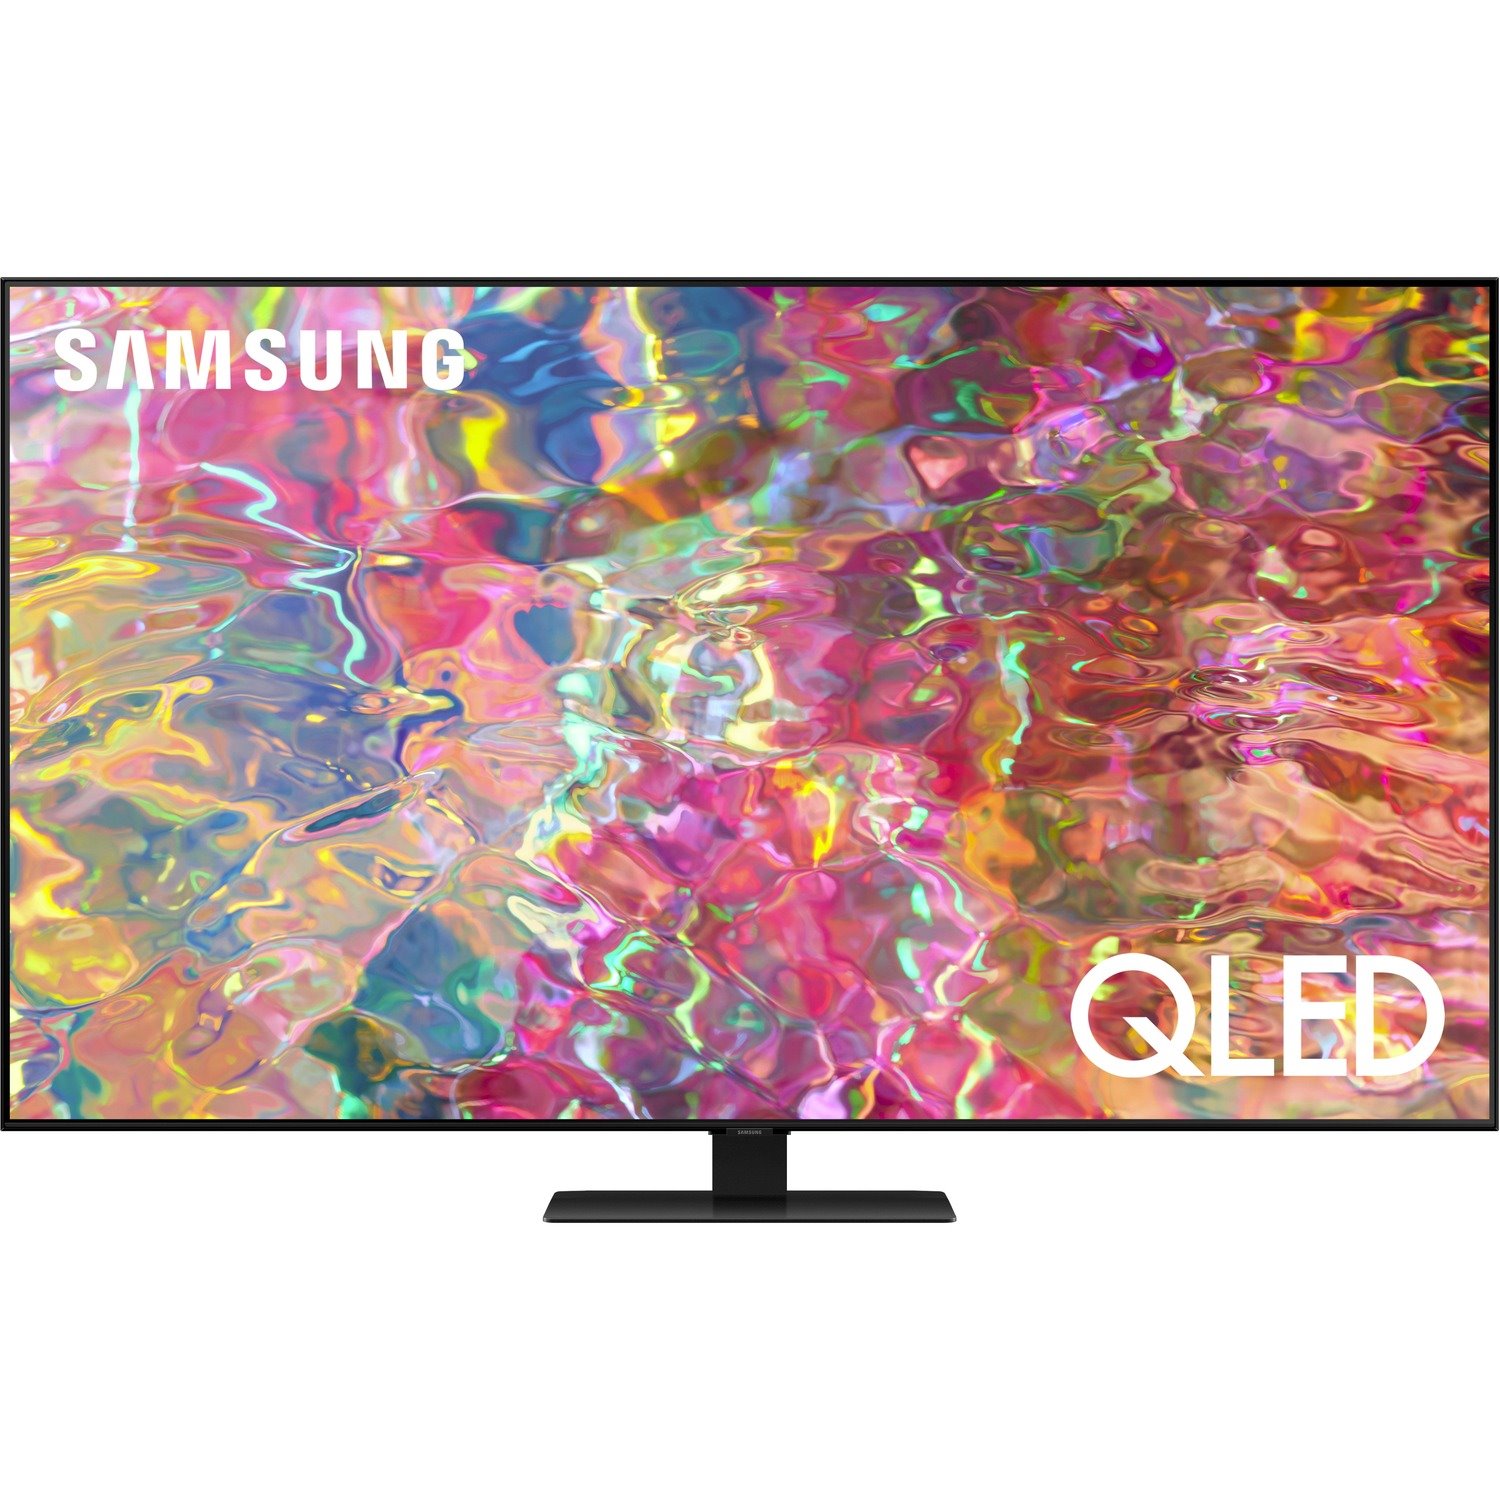 Samsung Q80B QN55Q80BAF 54.6" Smart LED-LCD TV - 4K UHDTV - Titan Black, Sand Black